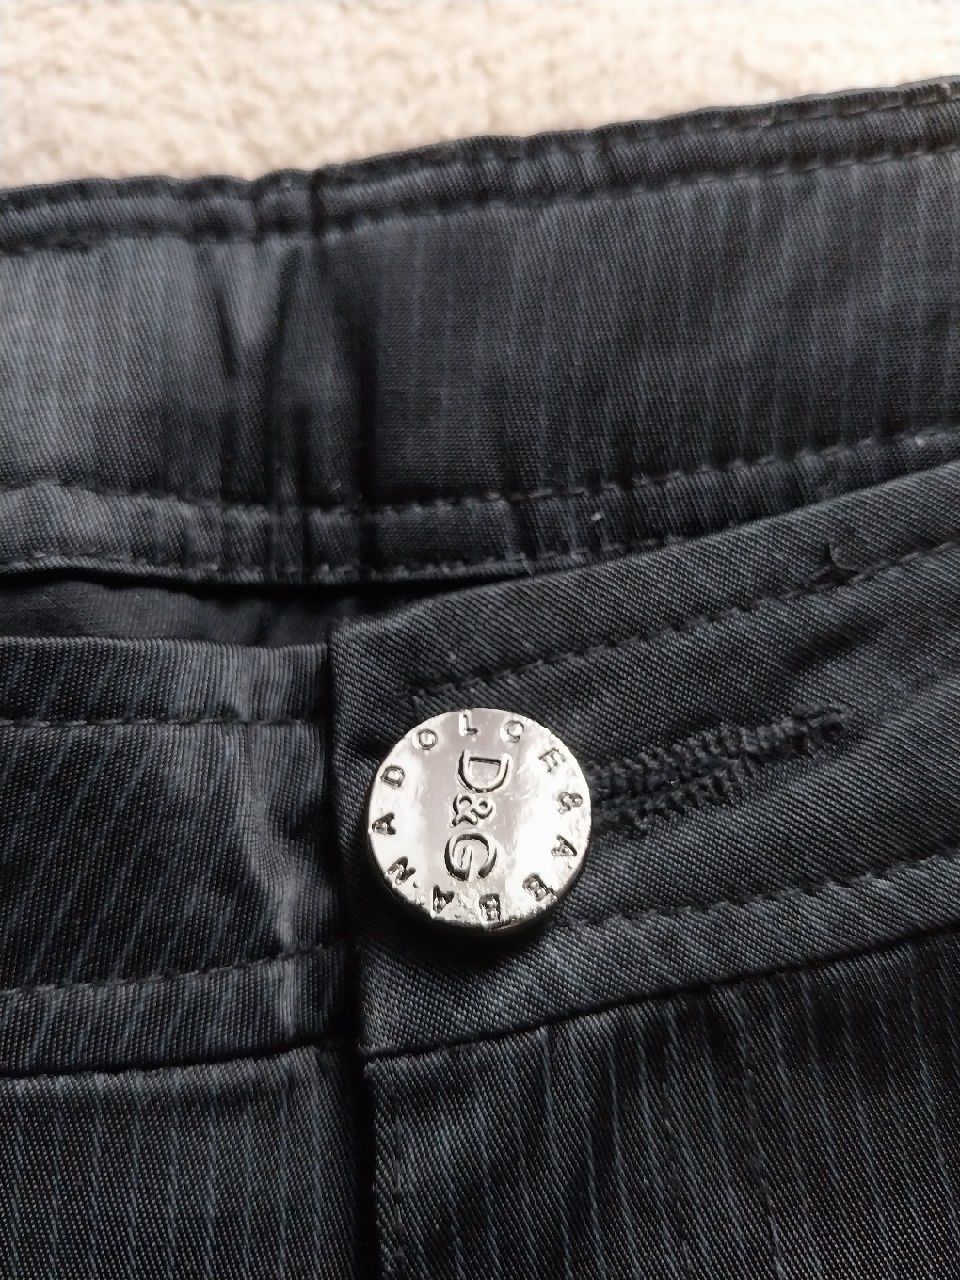 Damskie spodnie z logo  D&G